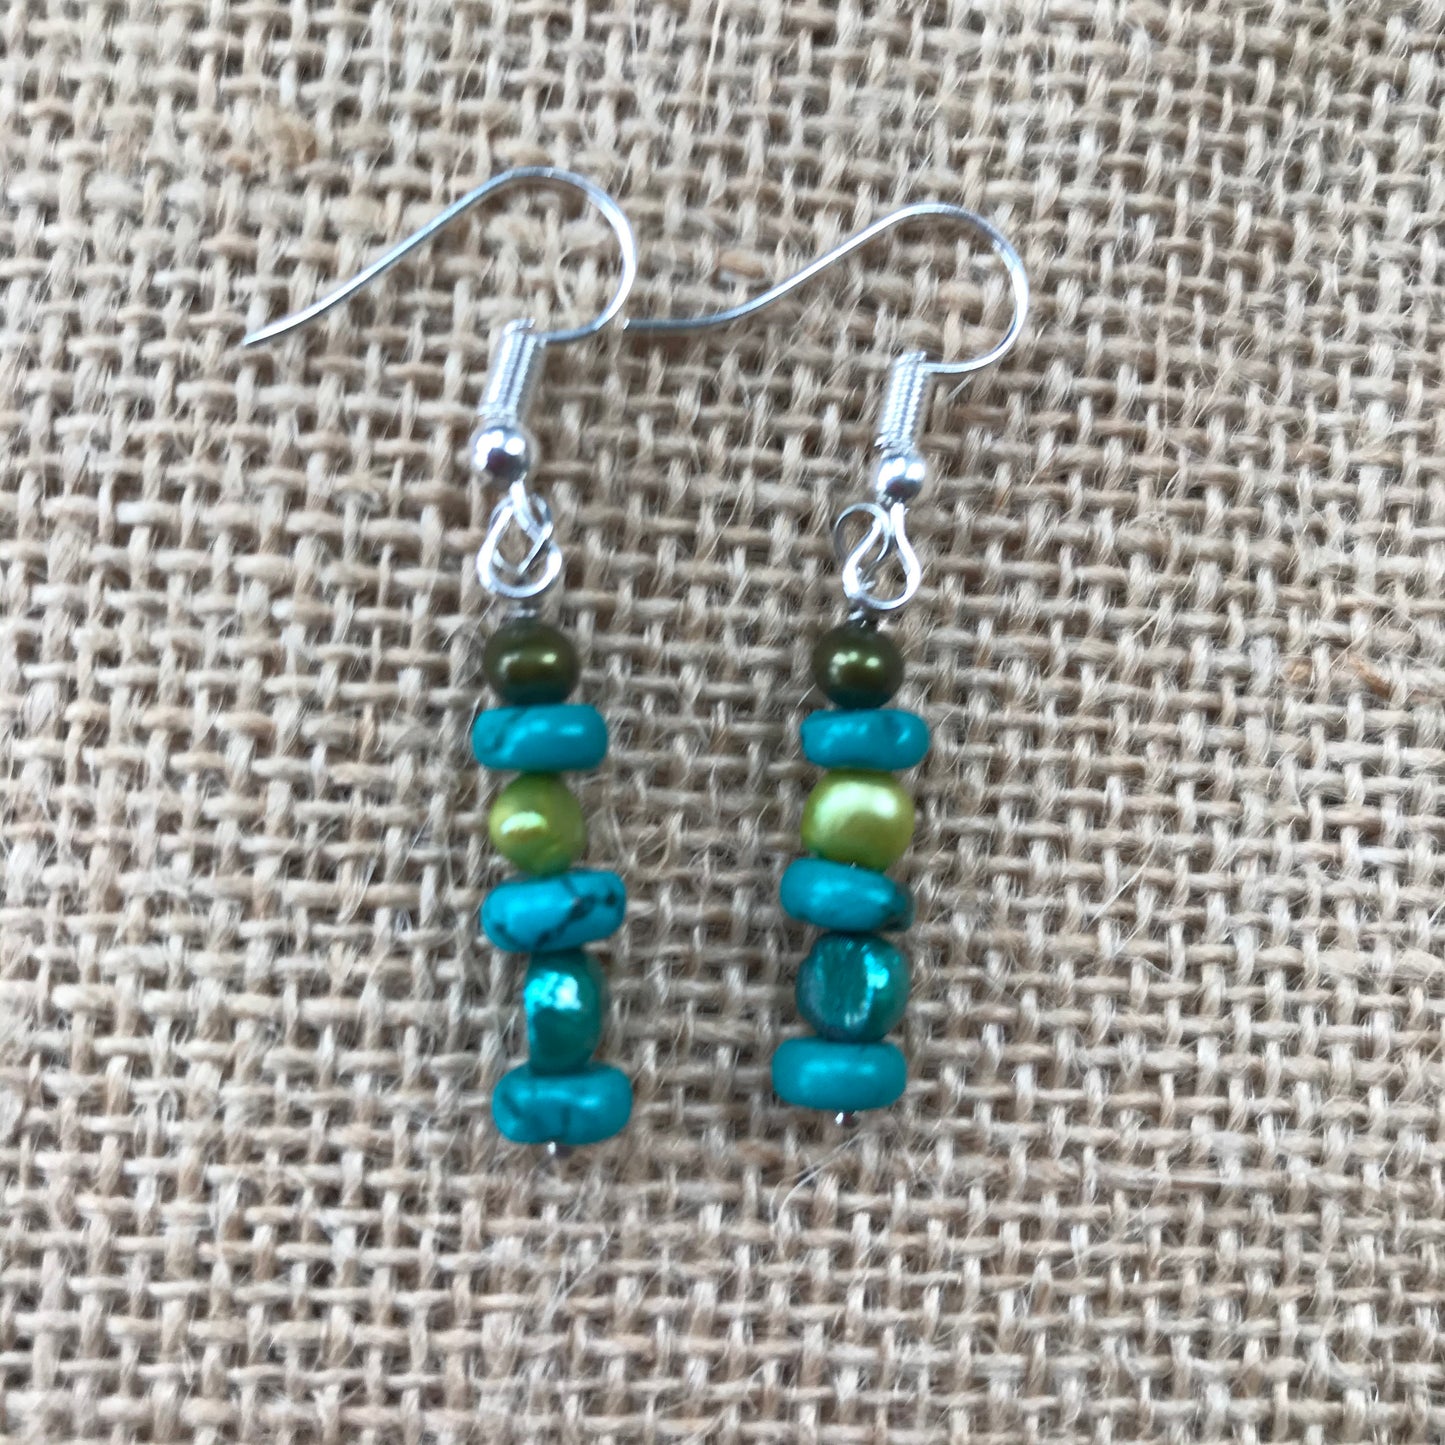 Turquoise Earrings - Women's Turquoise Earrings - Sterling Silver Earrings - Silver Custom Earrings - Gift - Present